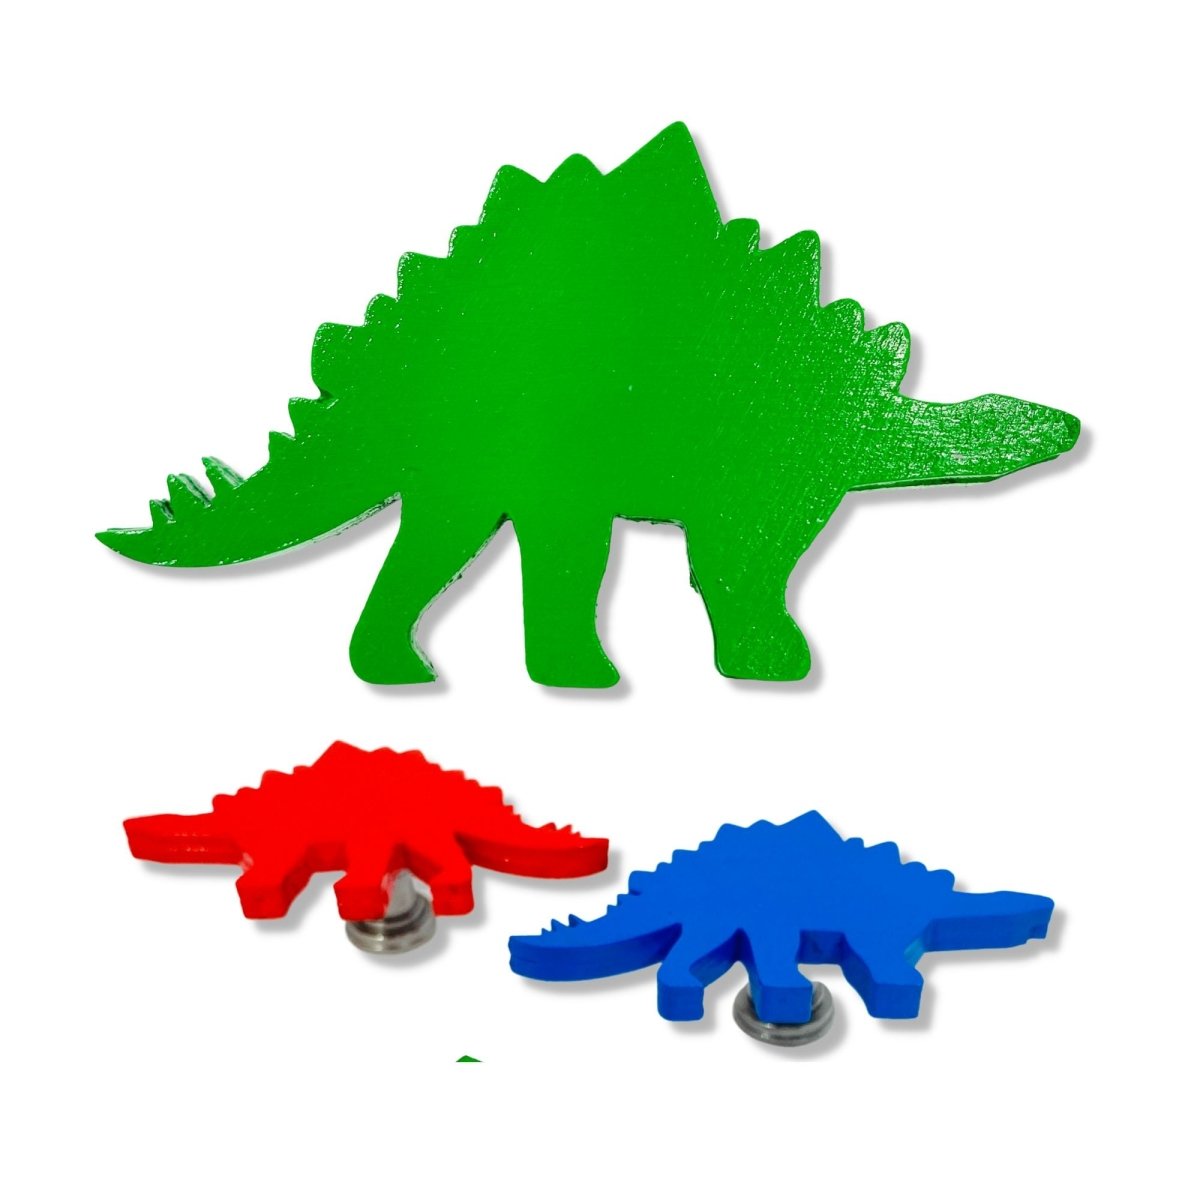 Stegosaurus Drawer Knob - DaRosa Creations